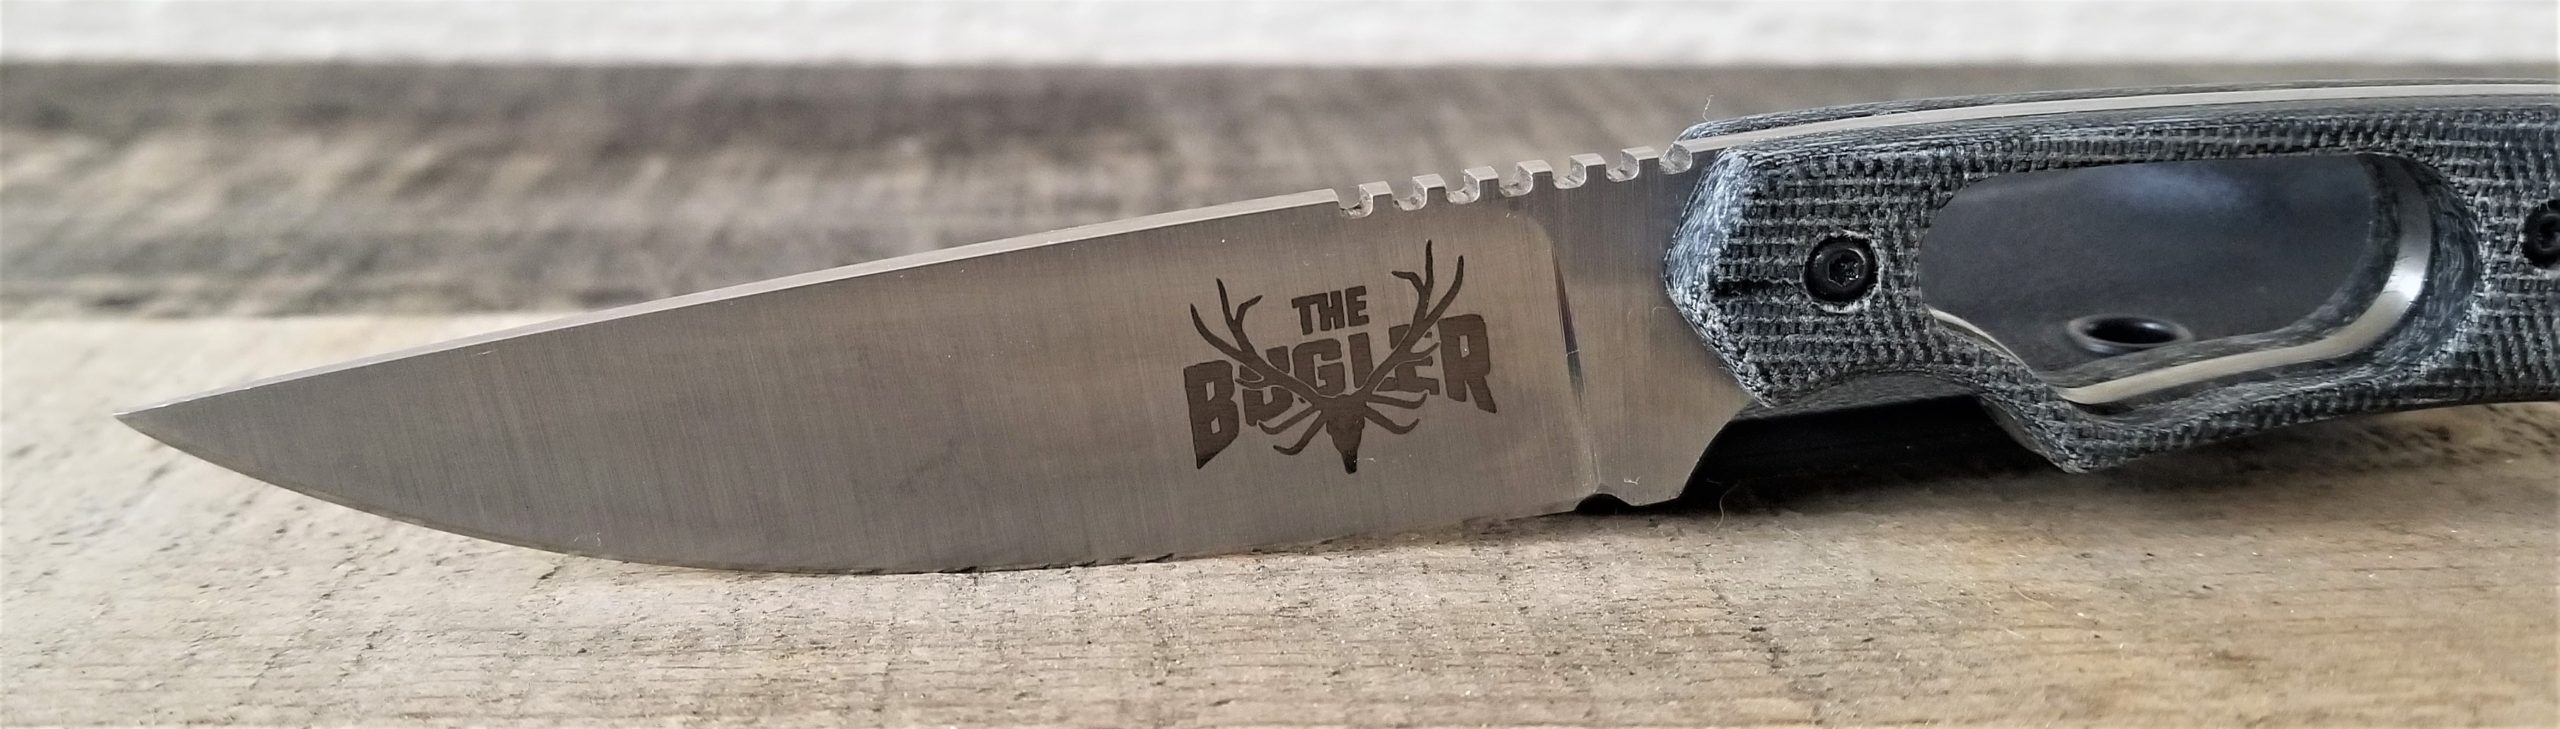 Bugler Blade Knife ABE-L Steel